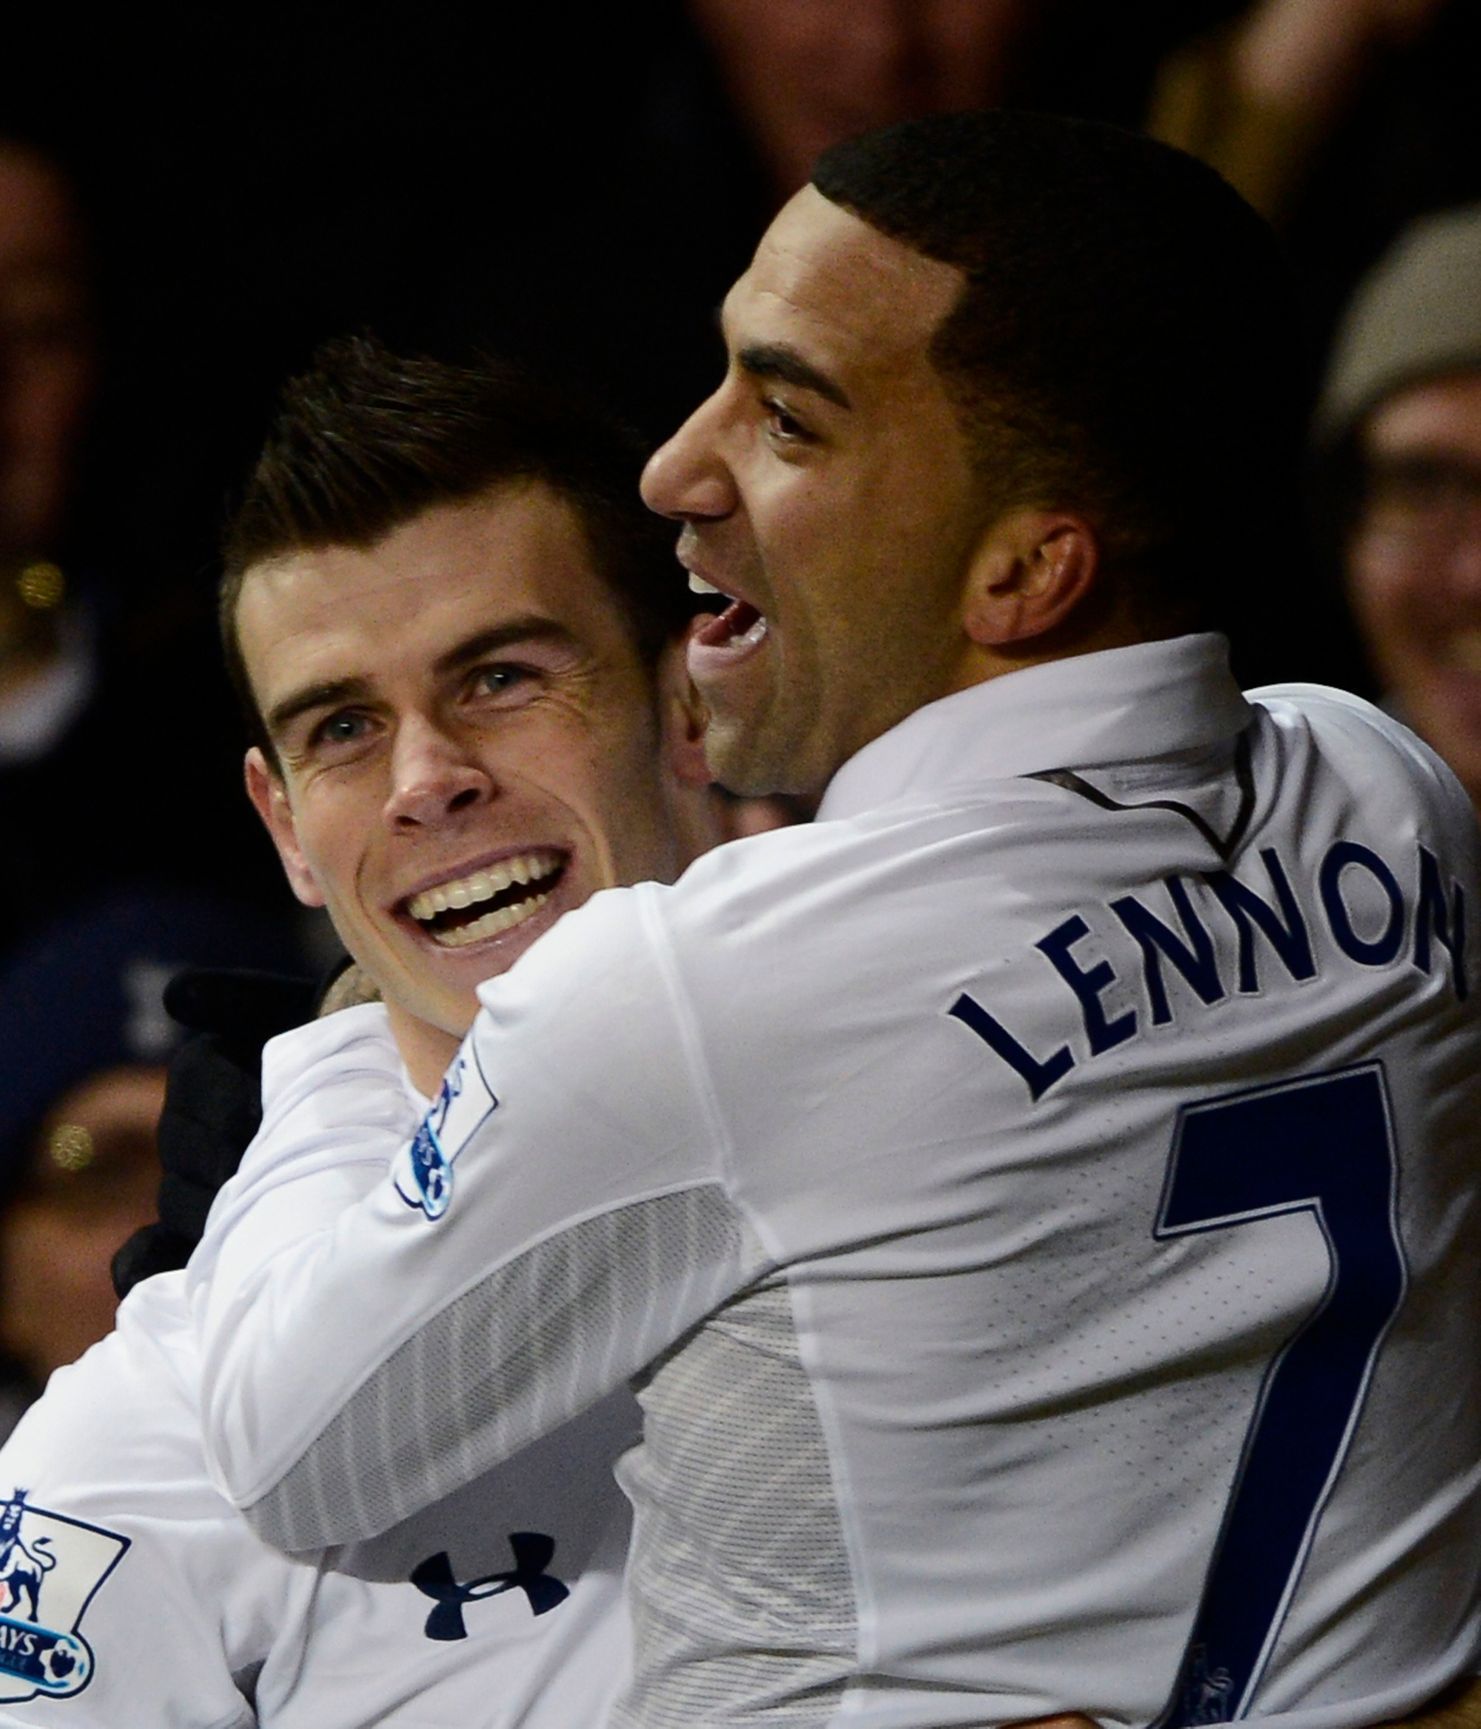 Tottenham - Liverpool (Bale a Lennon se radí)